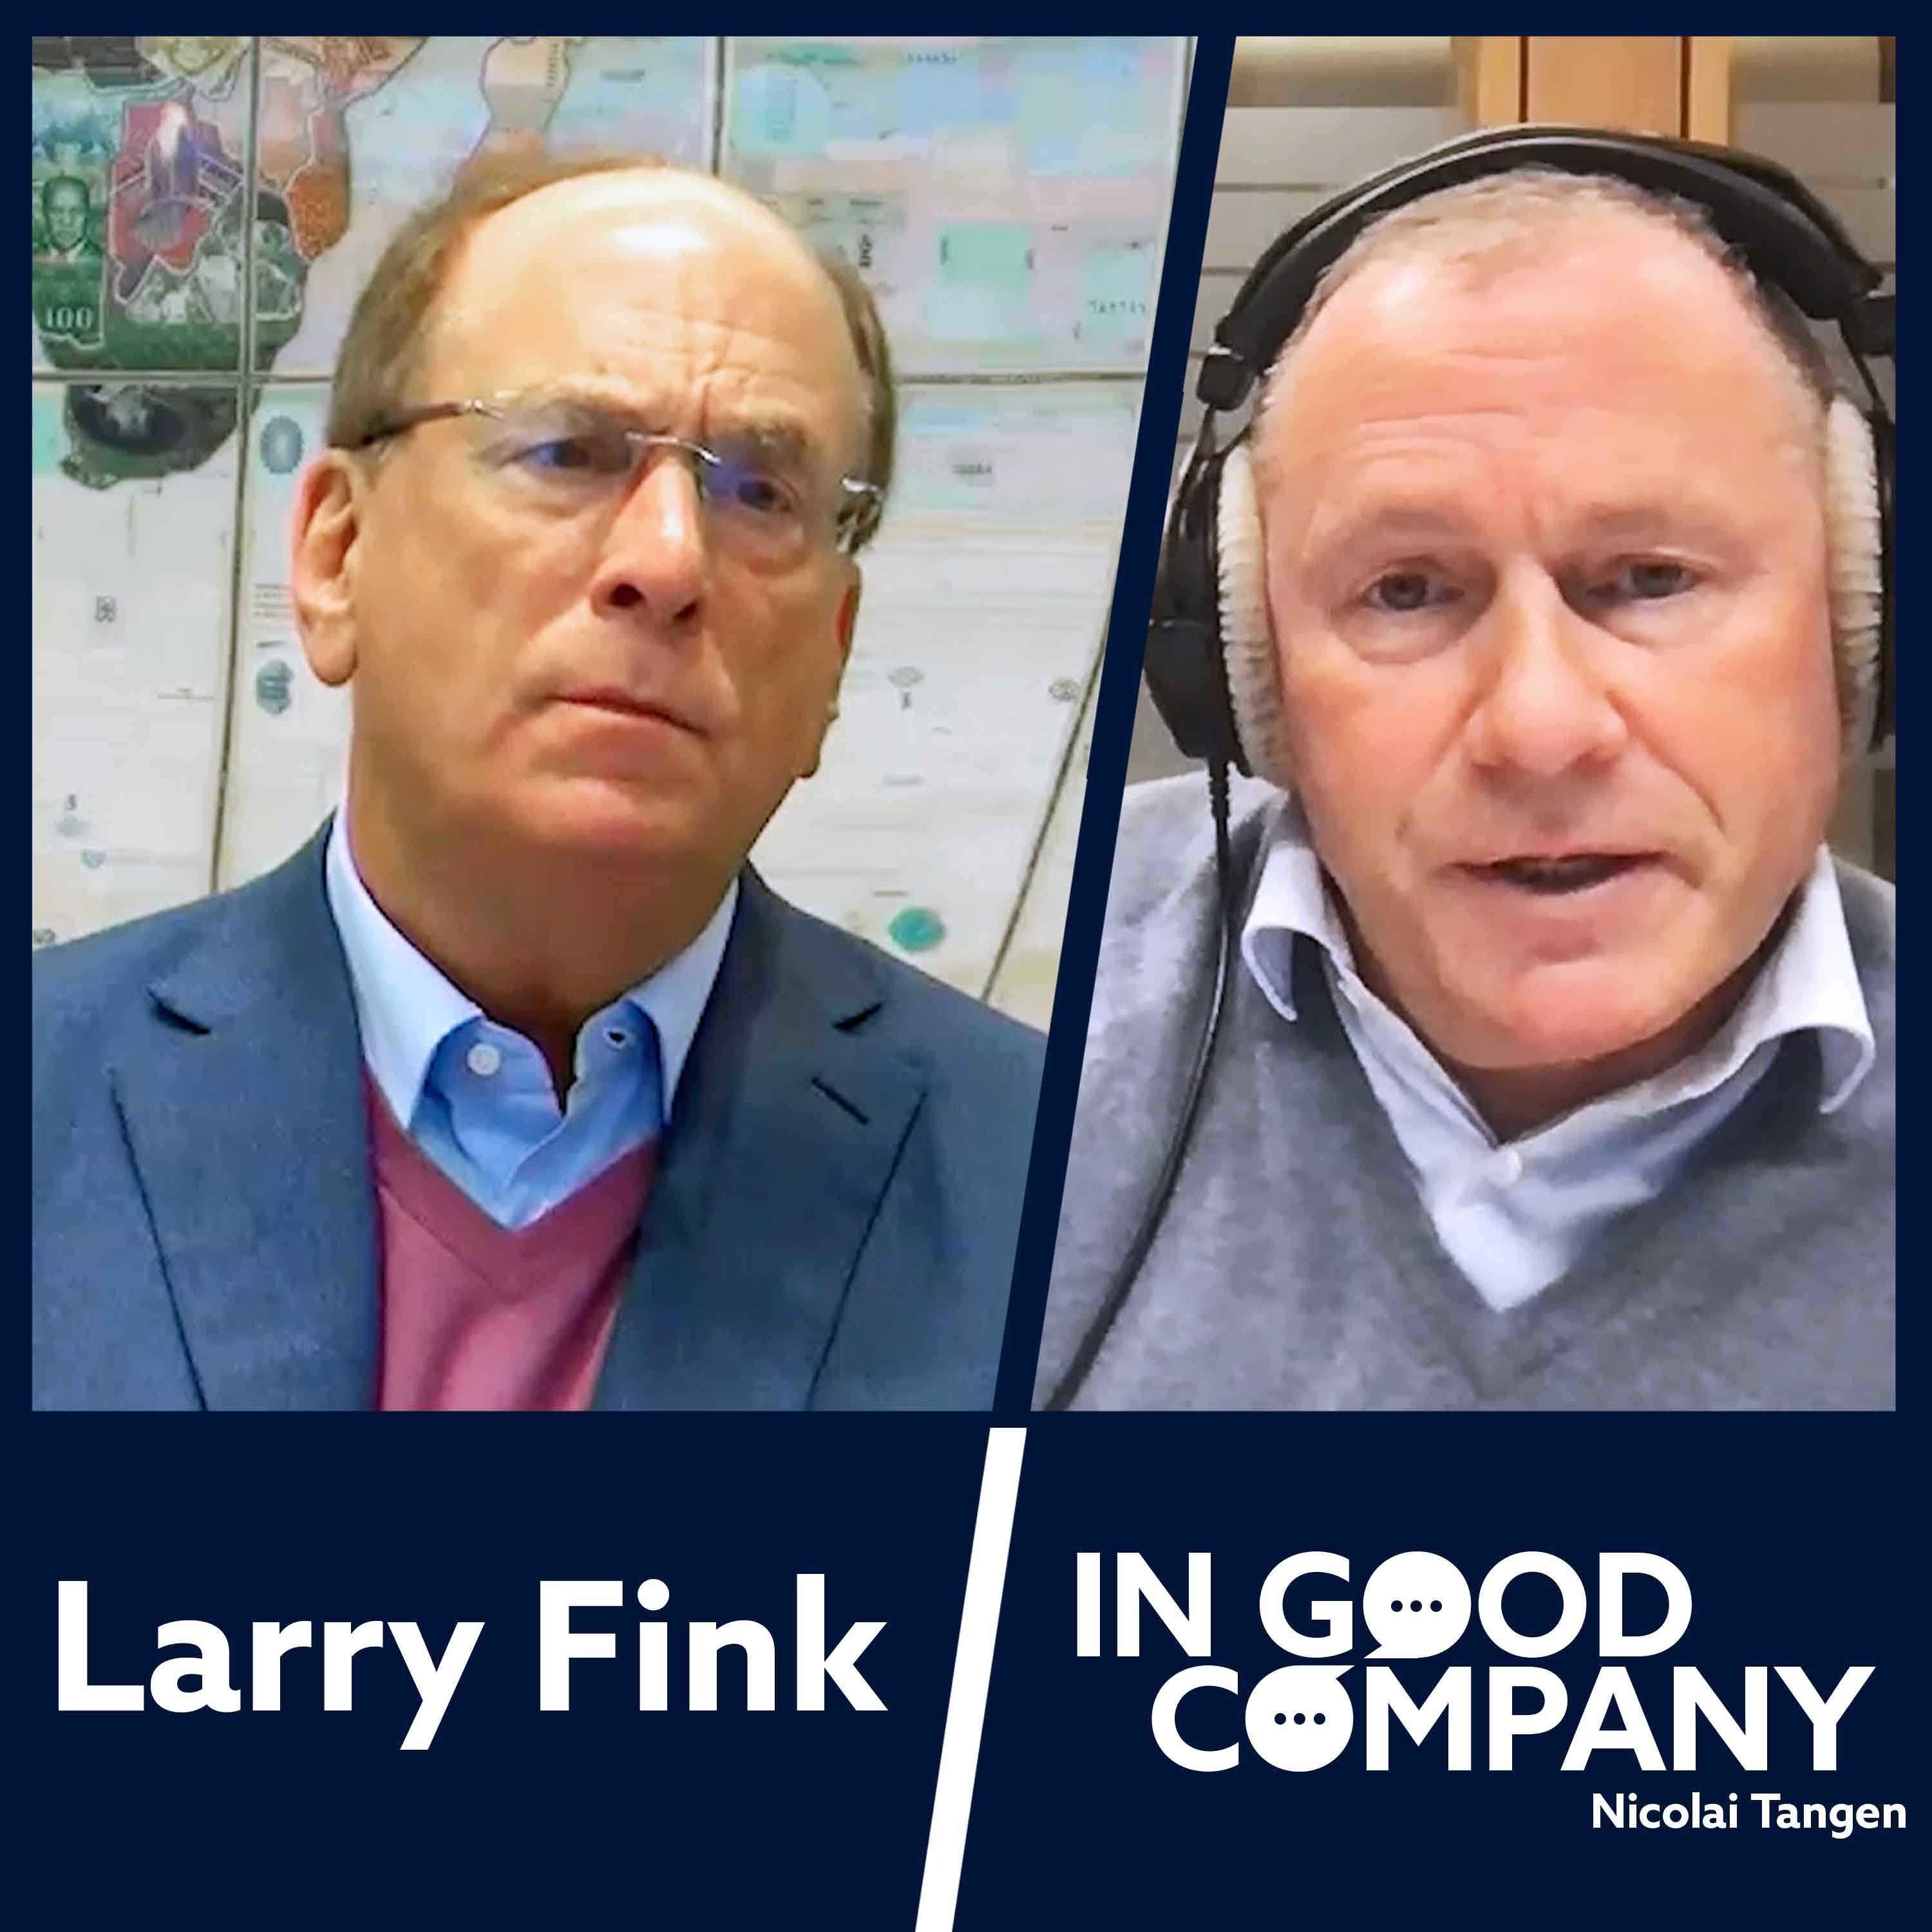 Larry Fink CEO of BlackRock